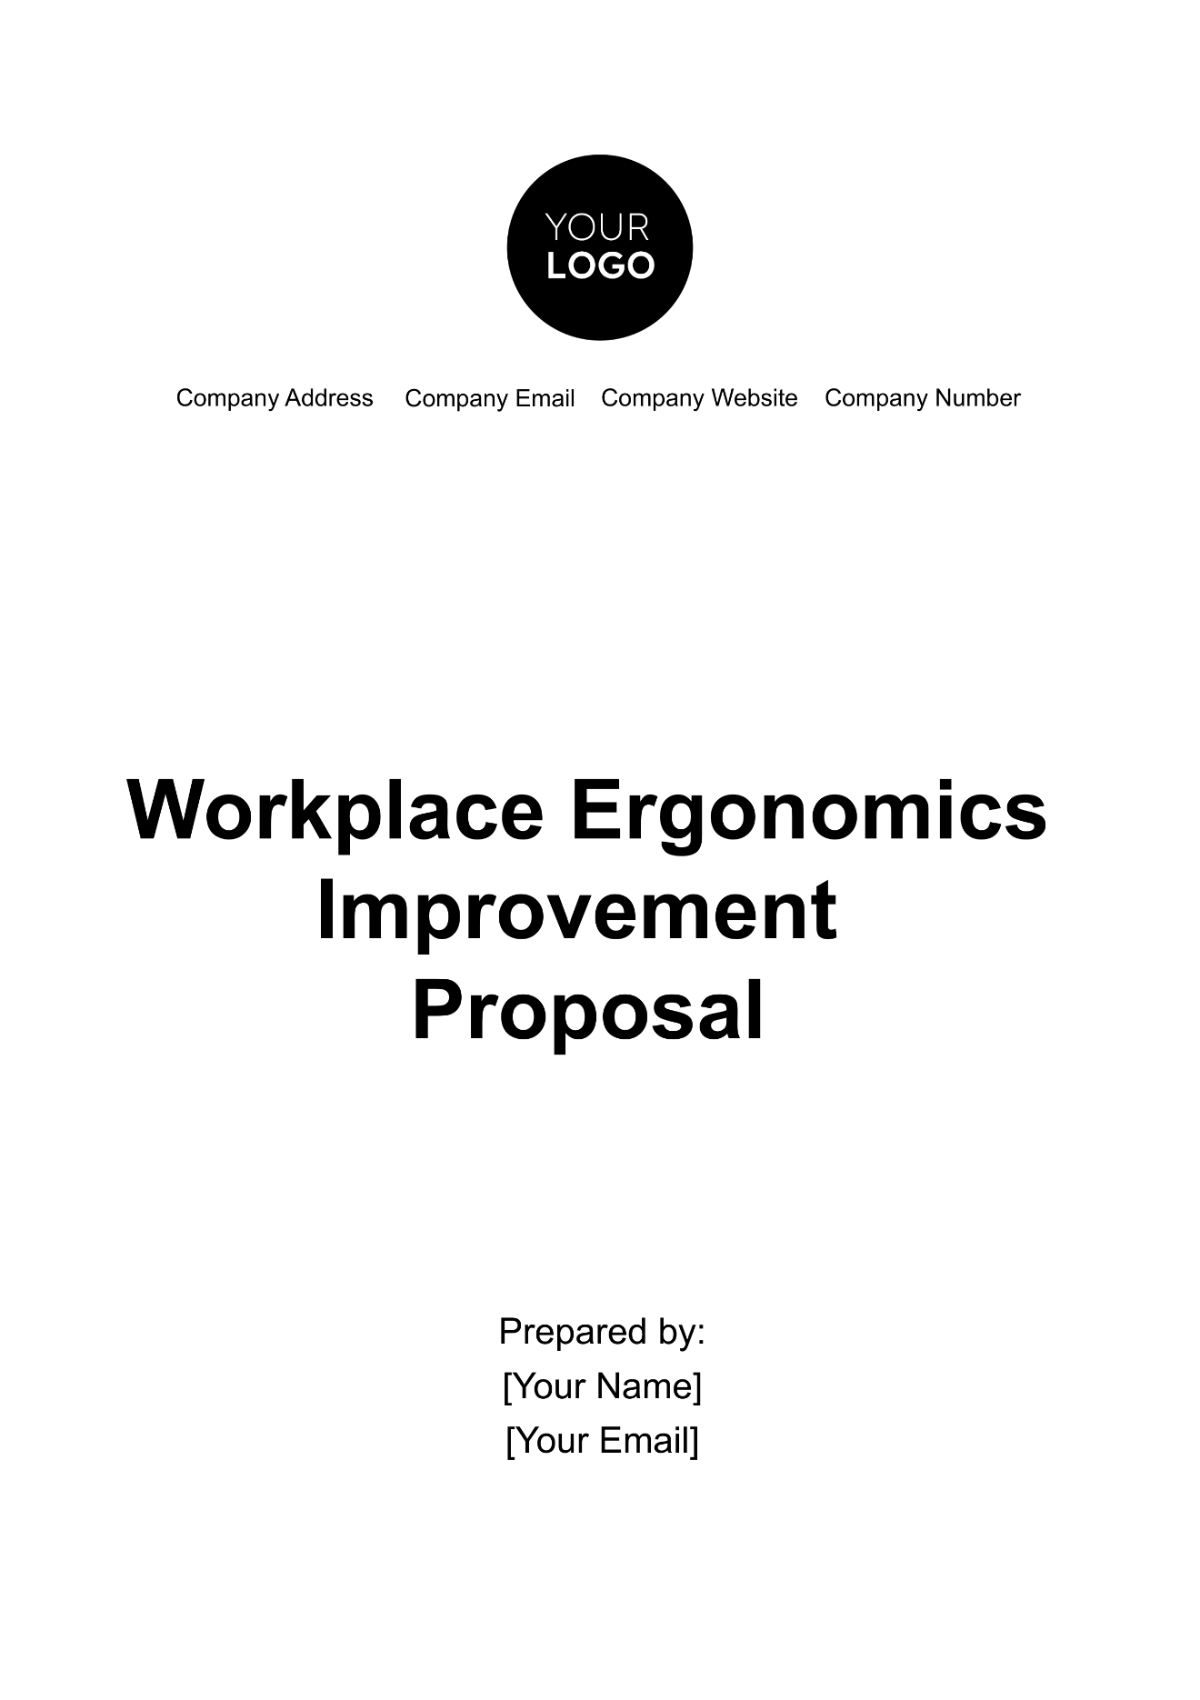 Workplace Ergonomics Improvement Proposal Template